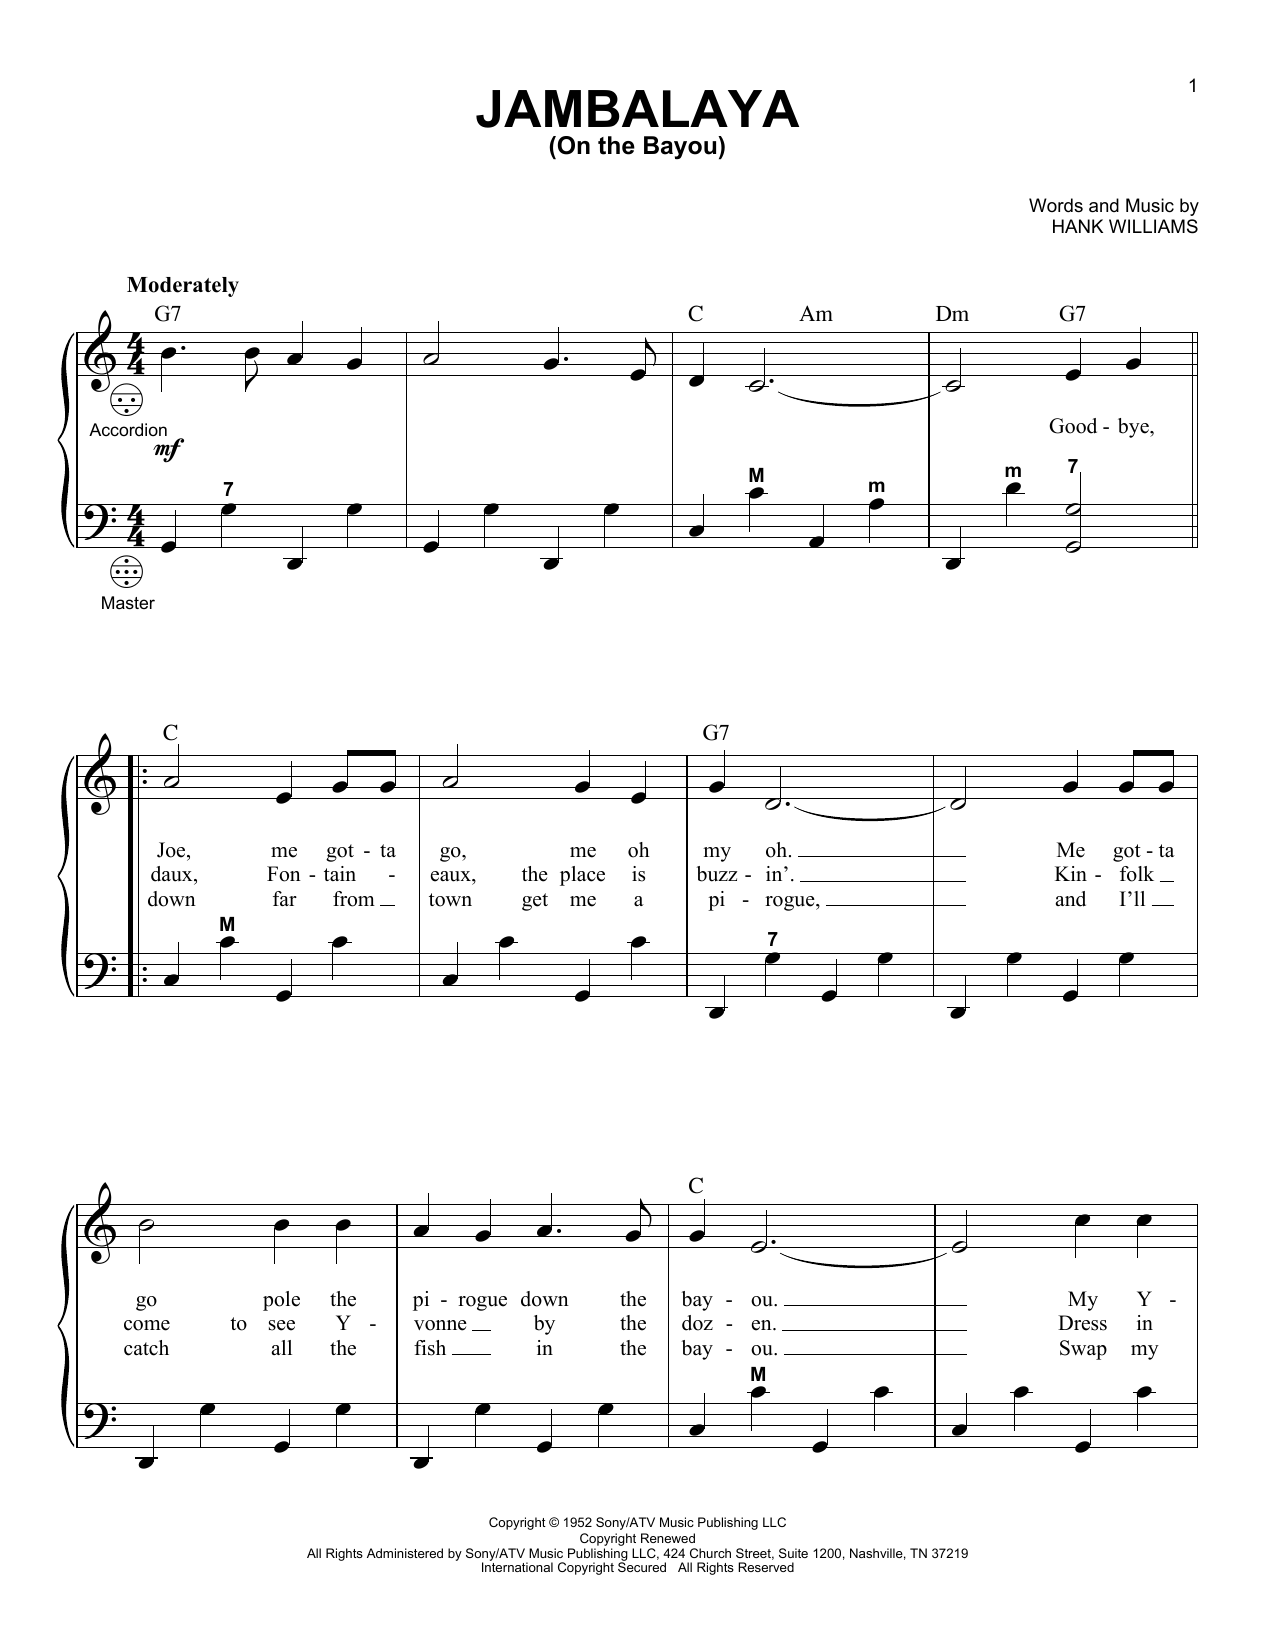 Gary Meisner Jambalaya (On The Bayou) Sheet Music Notes & Chords for Accordion - Download or Print PDF